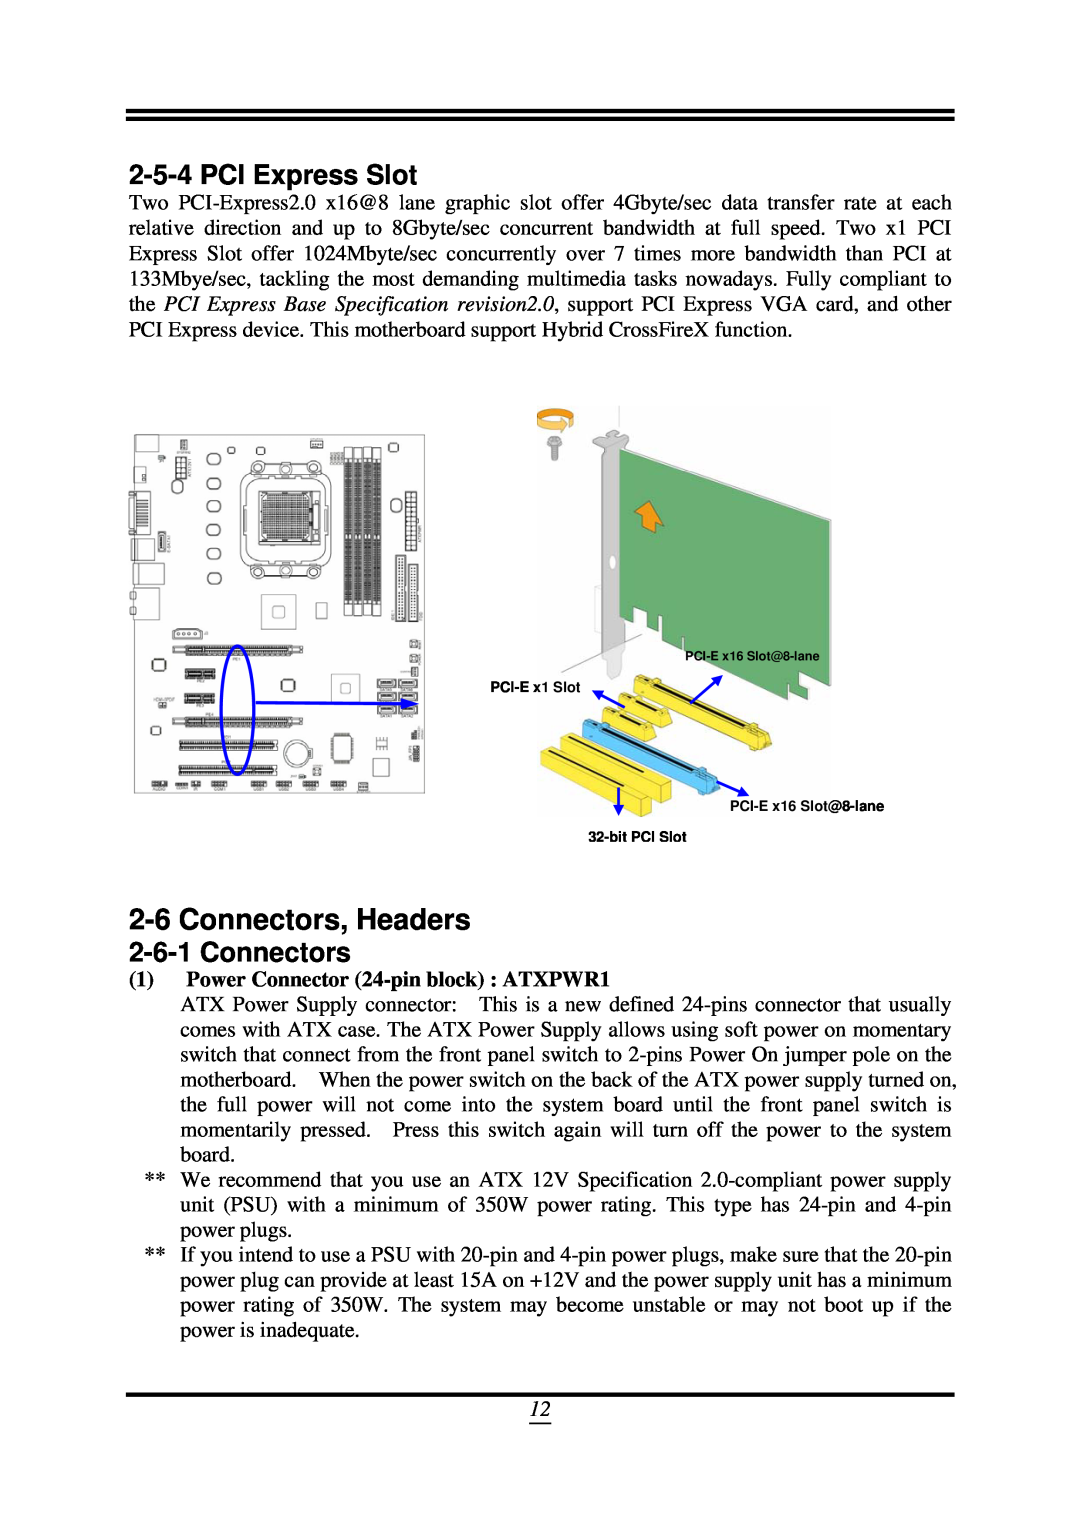 AMD SB750, 790GX user manual Connectors, Headers, PCI Express Slot, Power Connector 24-pin block ATXPWR1 